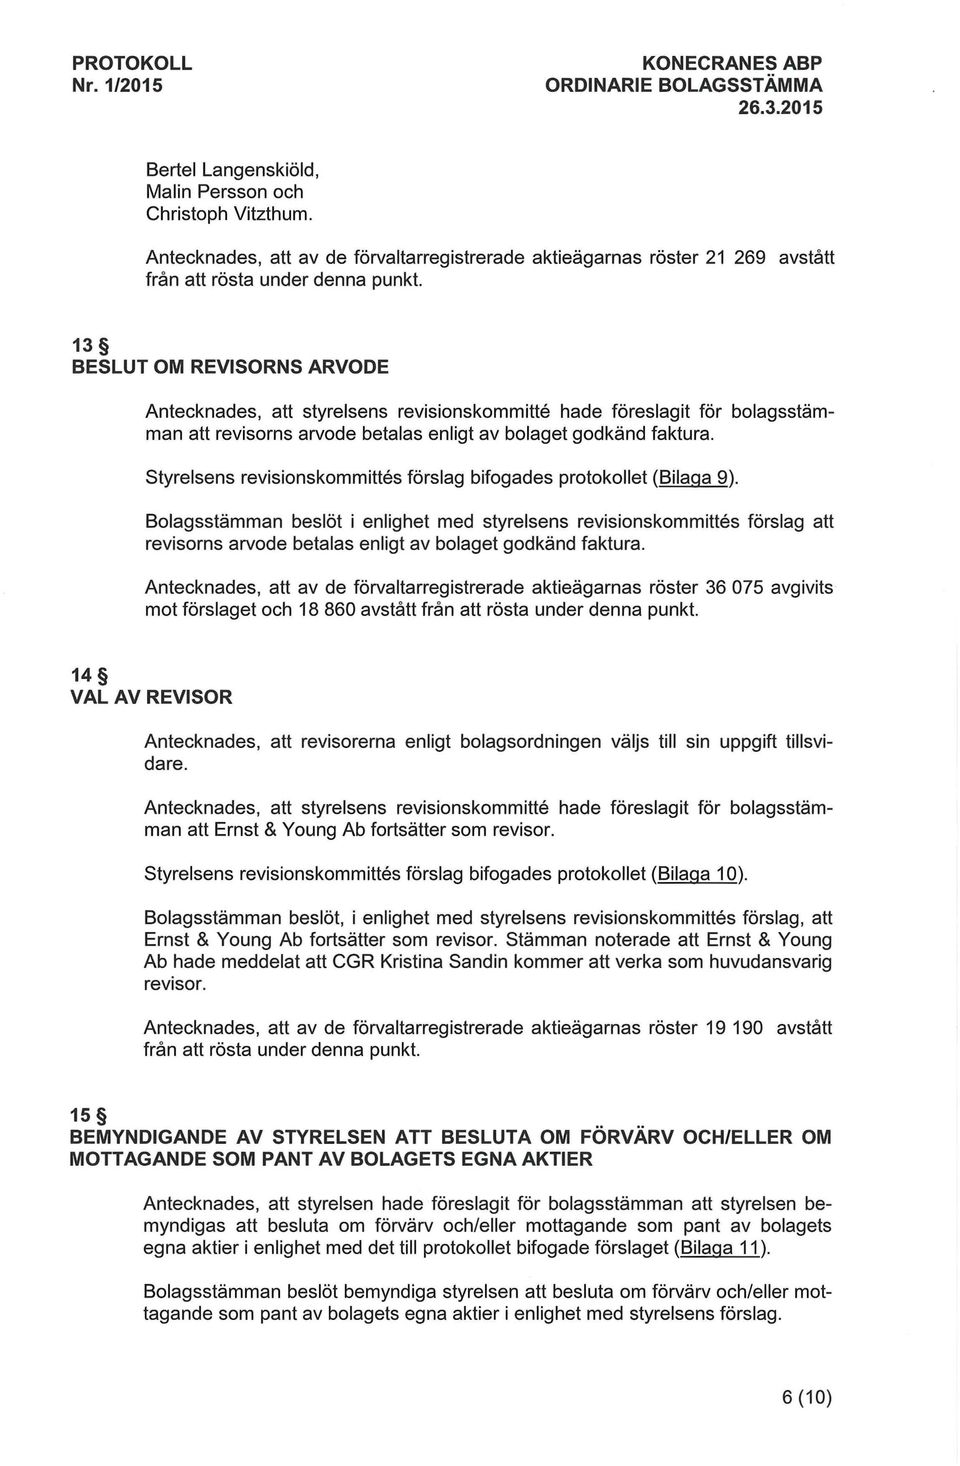 Styrelsens revisionskommittes forslag bifogades protokollet (Bilaga 9).